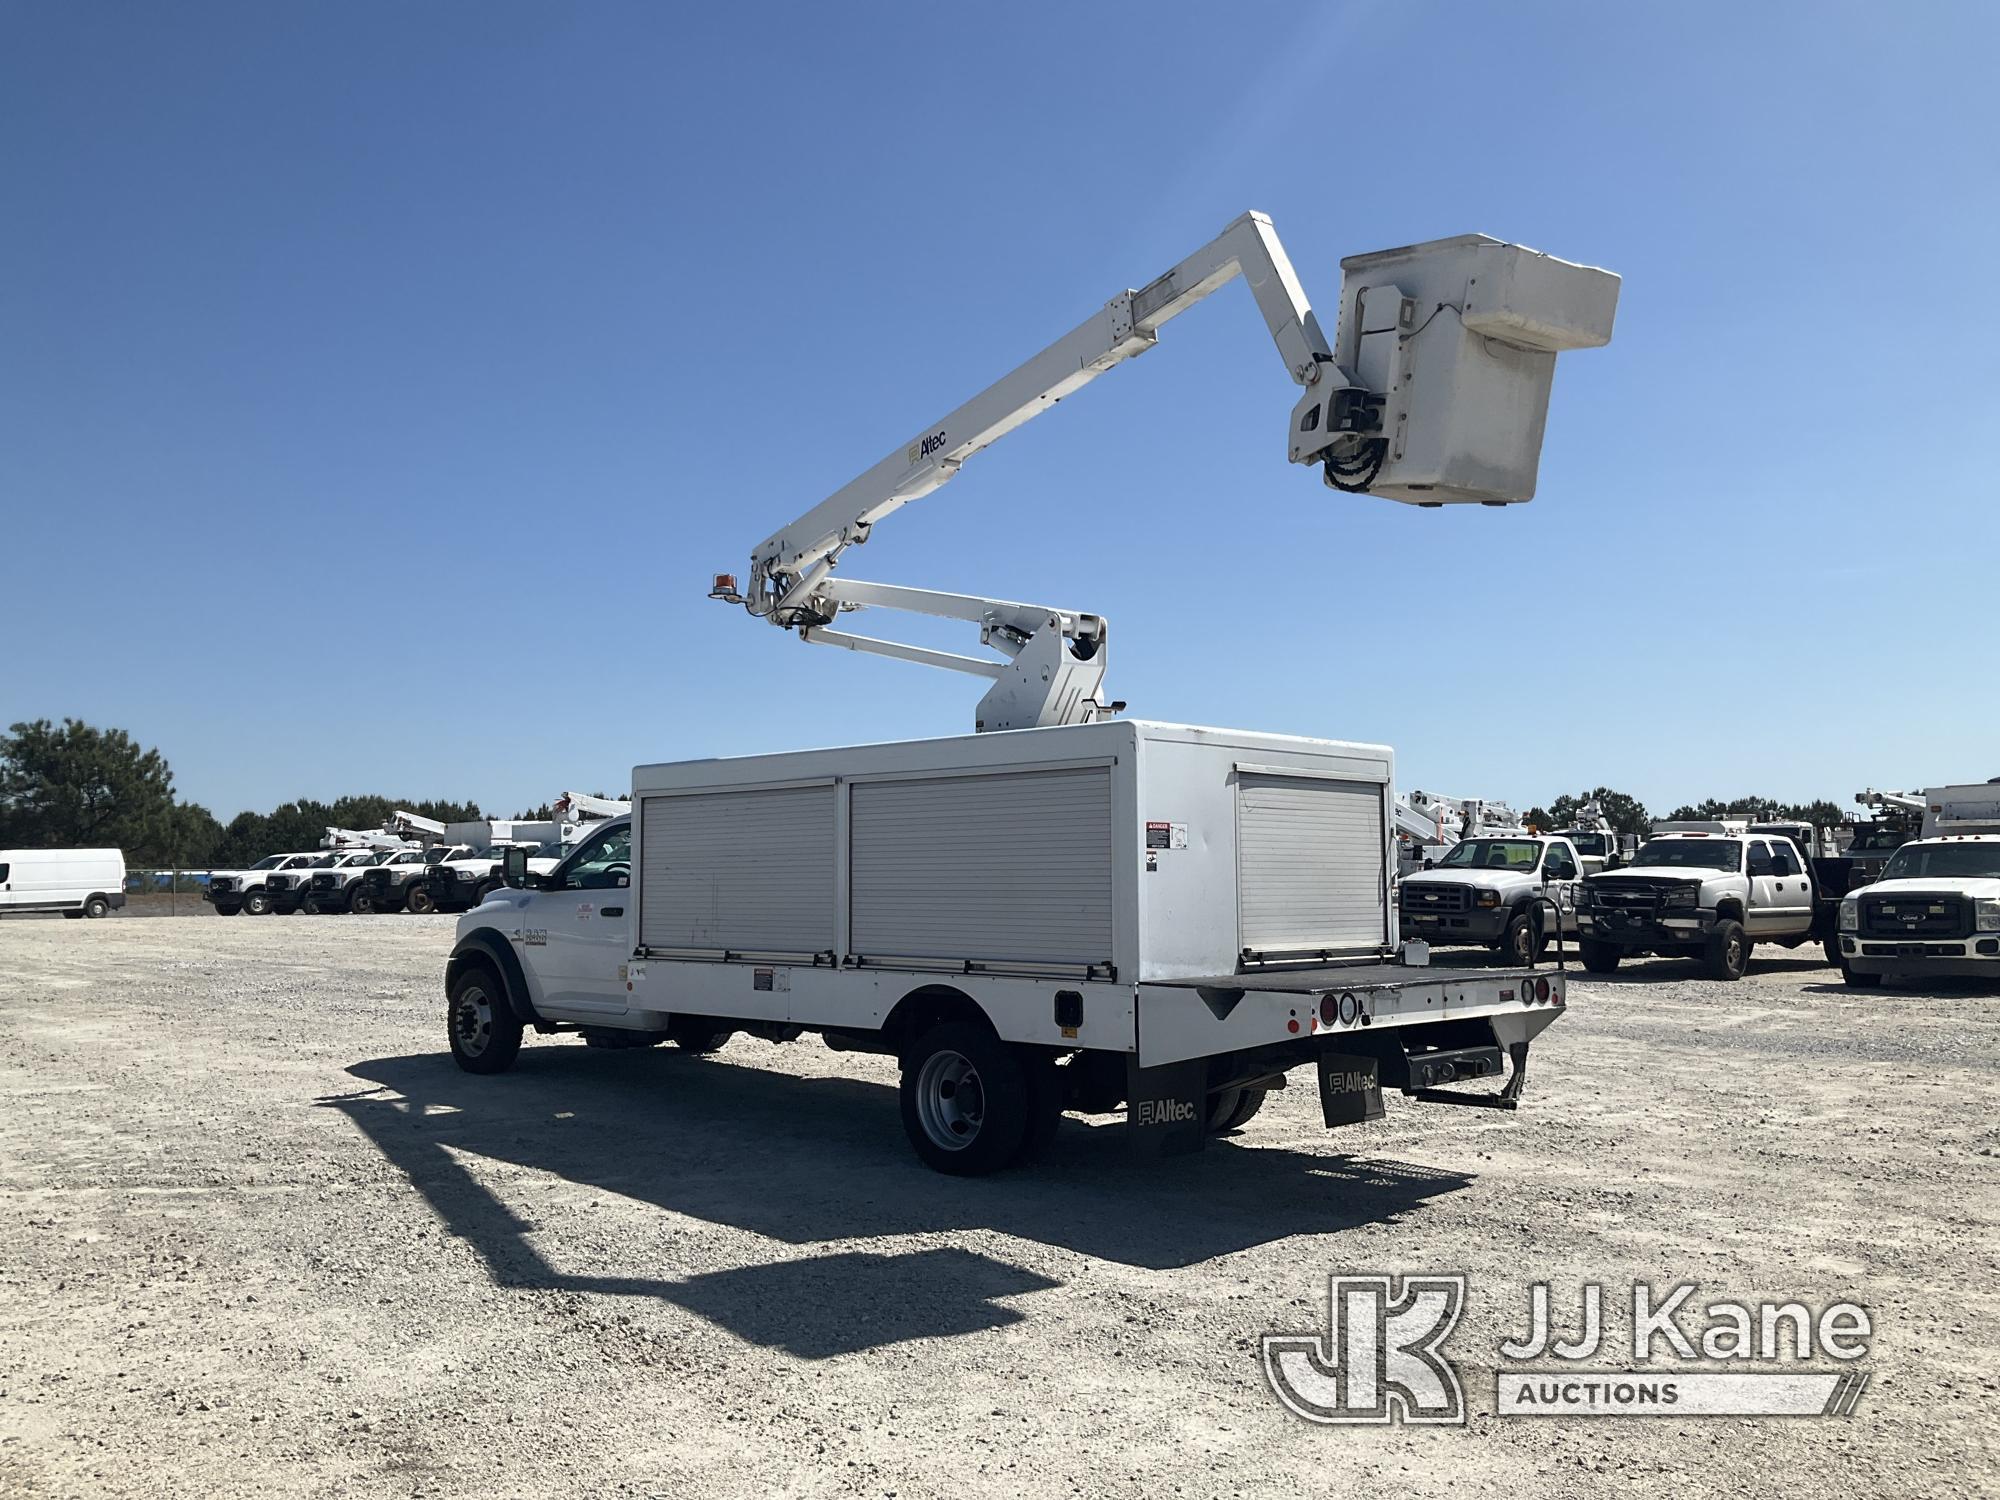 (Villa Rica, GA) Altec AT248F, Articulating & Telescopic Non-Insulated Bucket Truck center mounted o